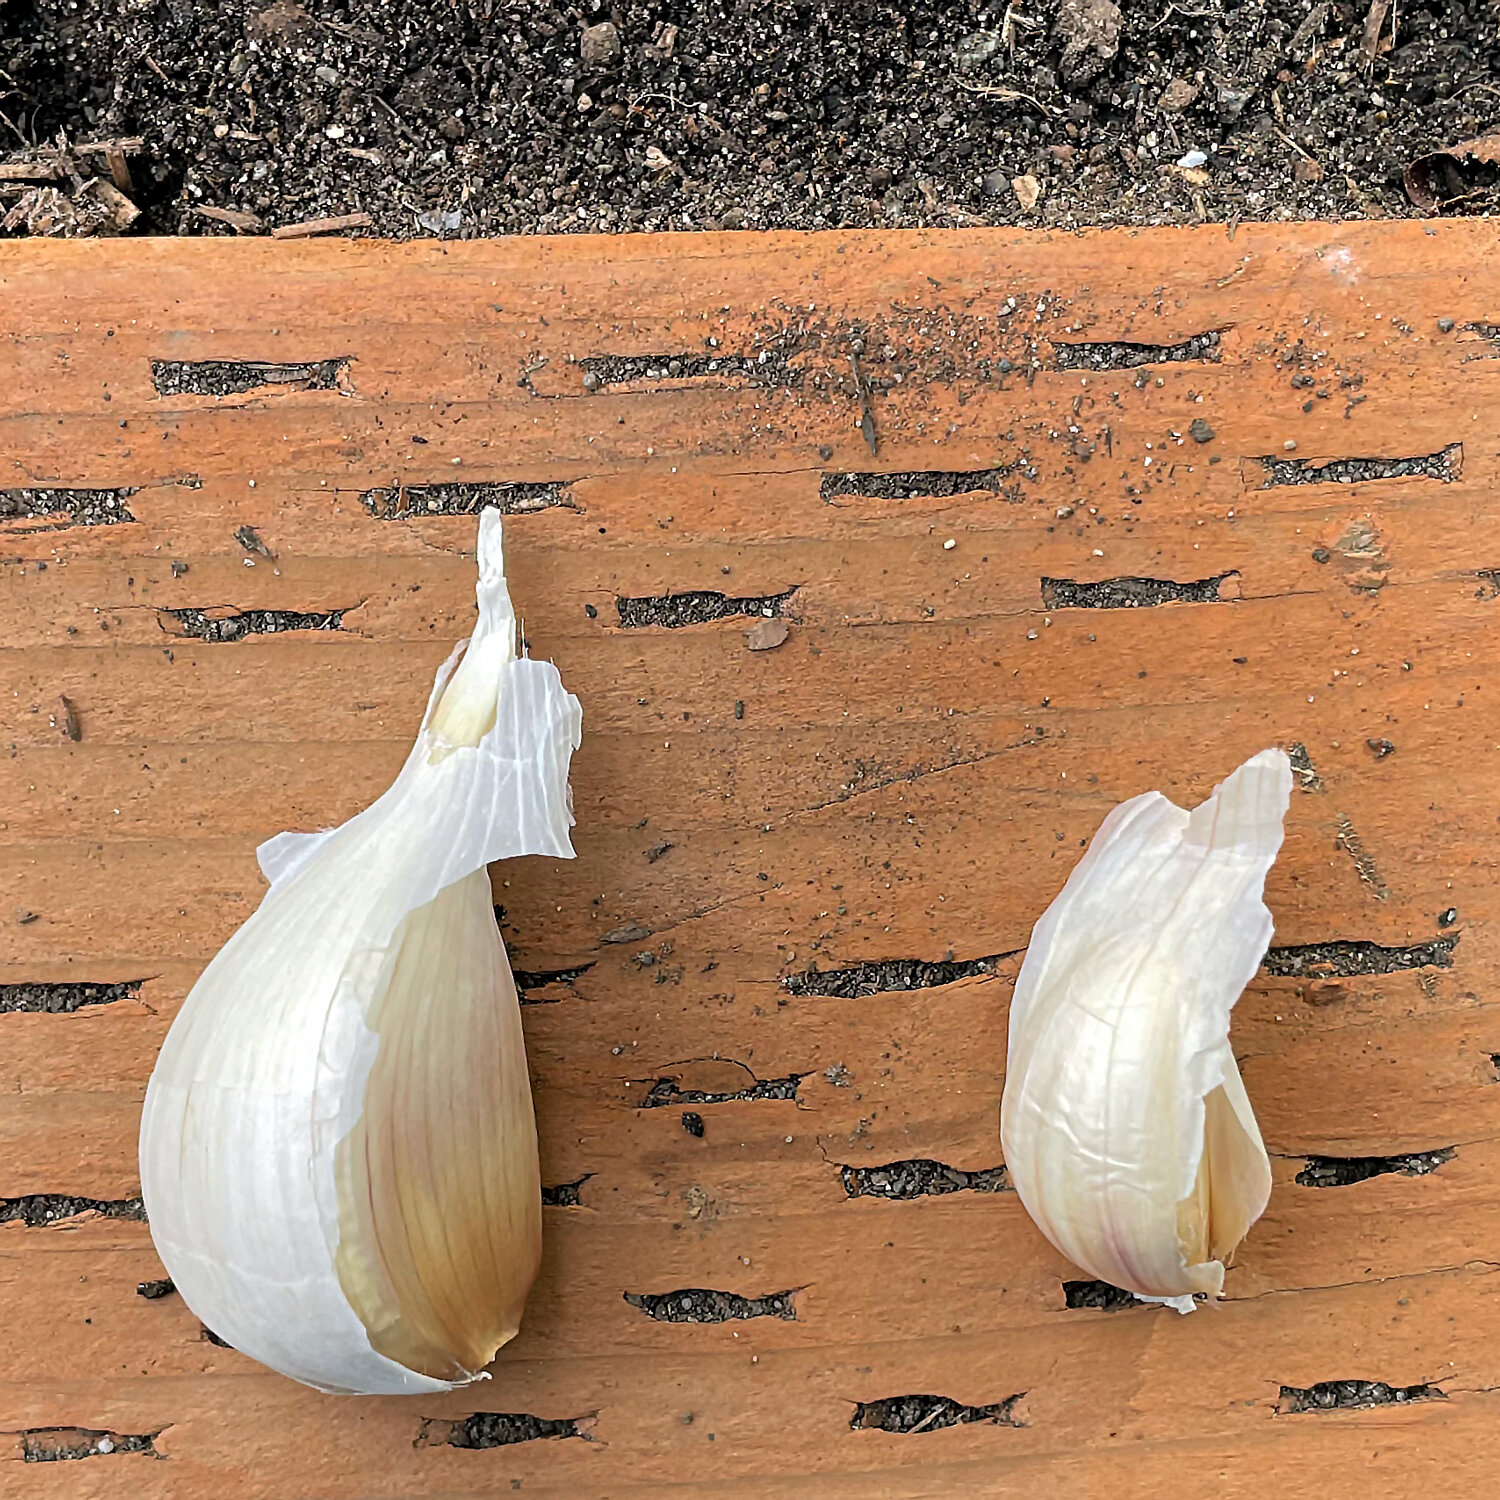 Planting garlic takes some planning ahead